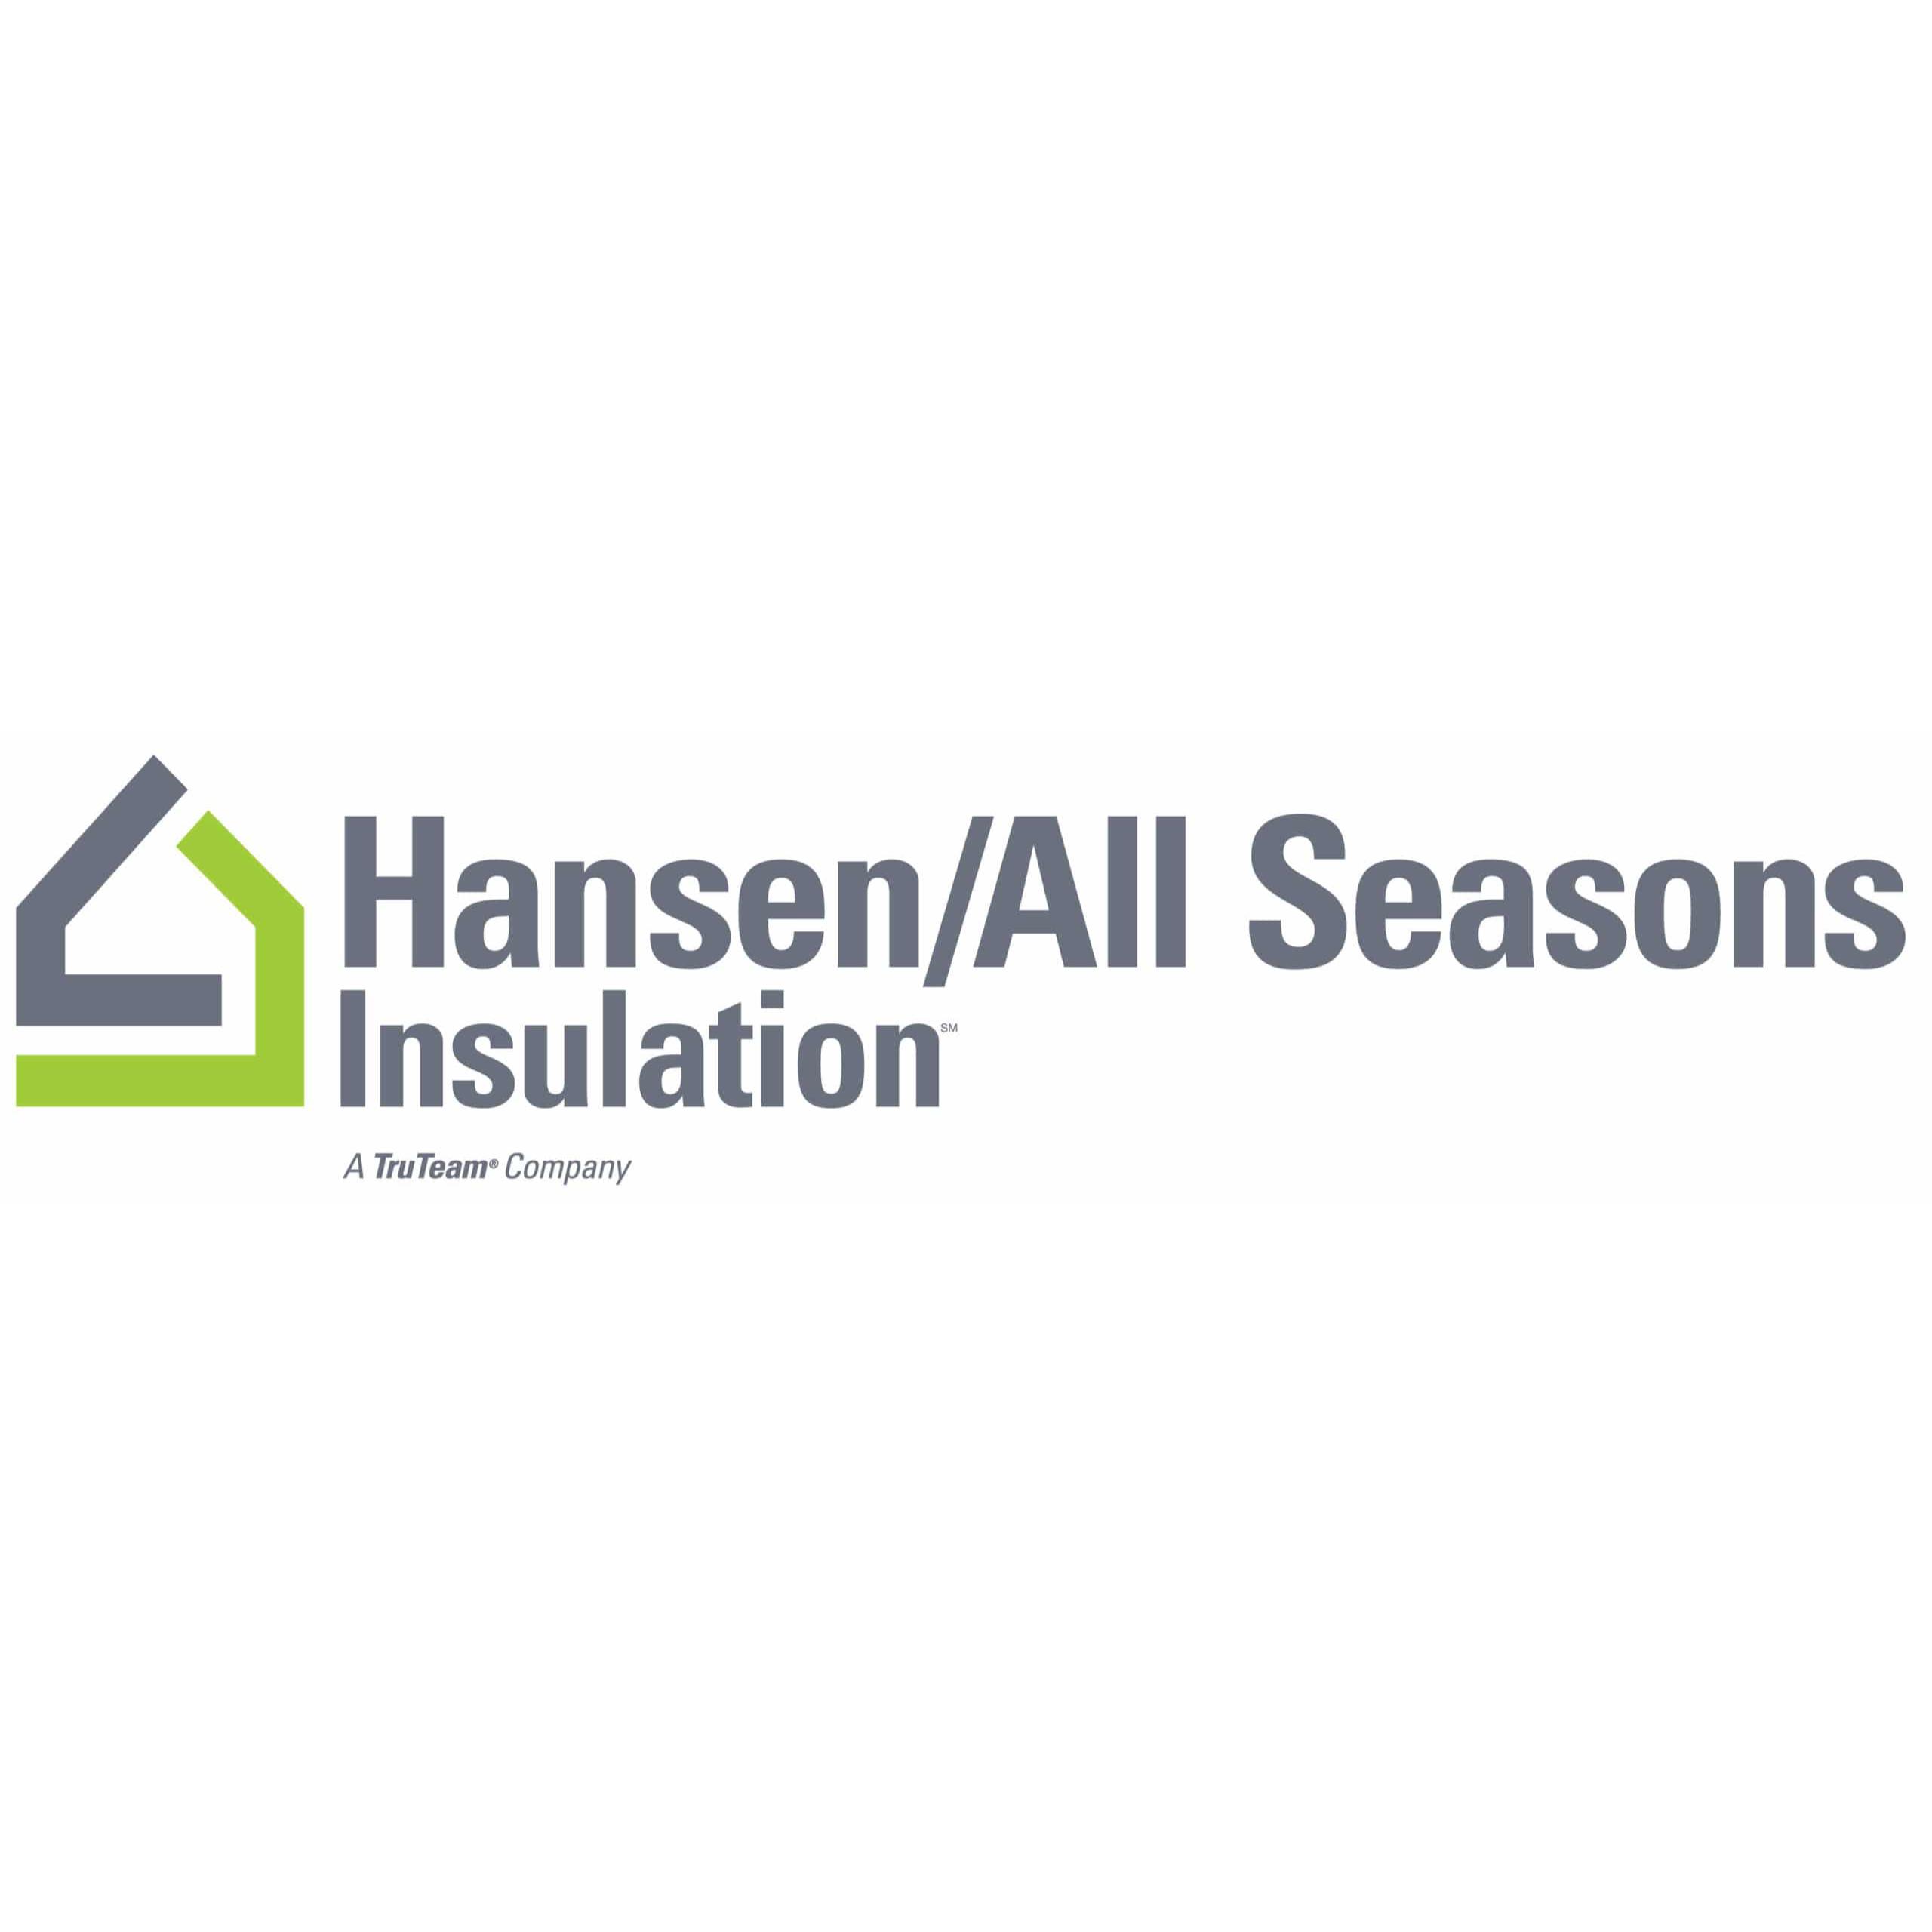 Hansen/All Seasons Insulation